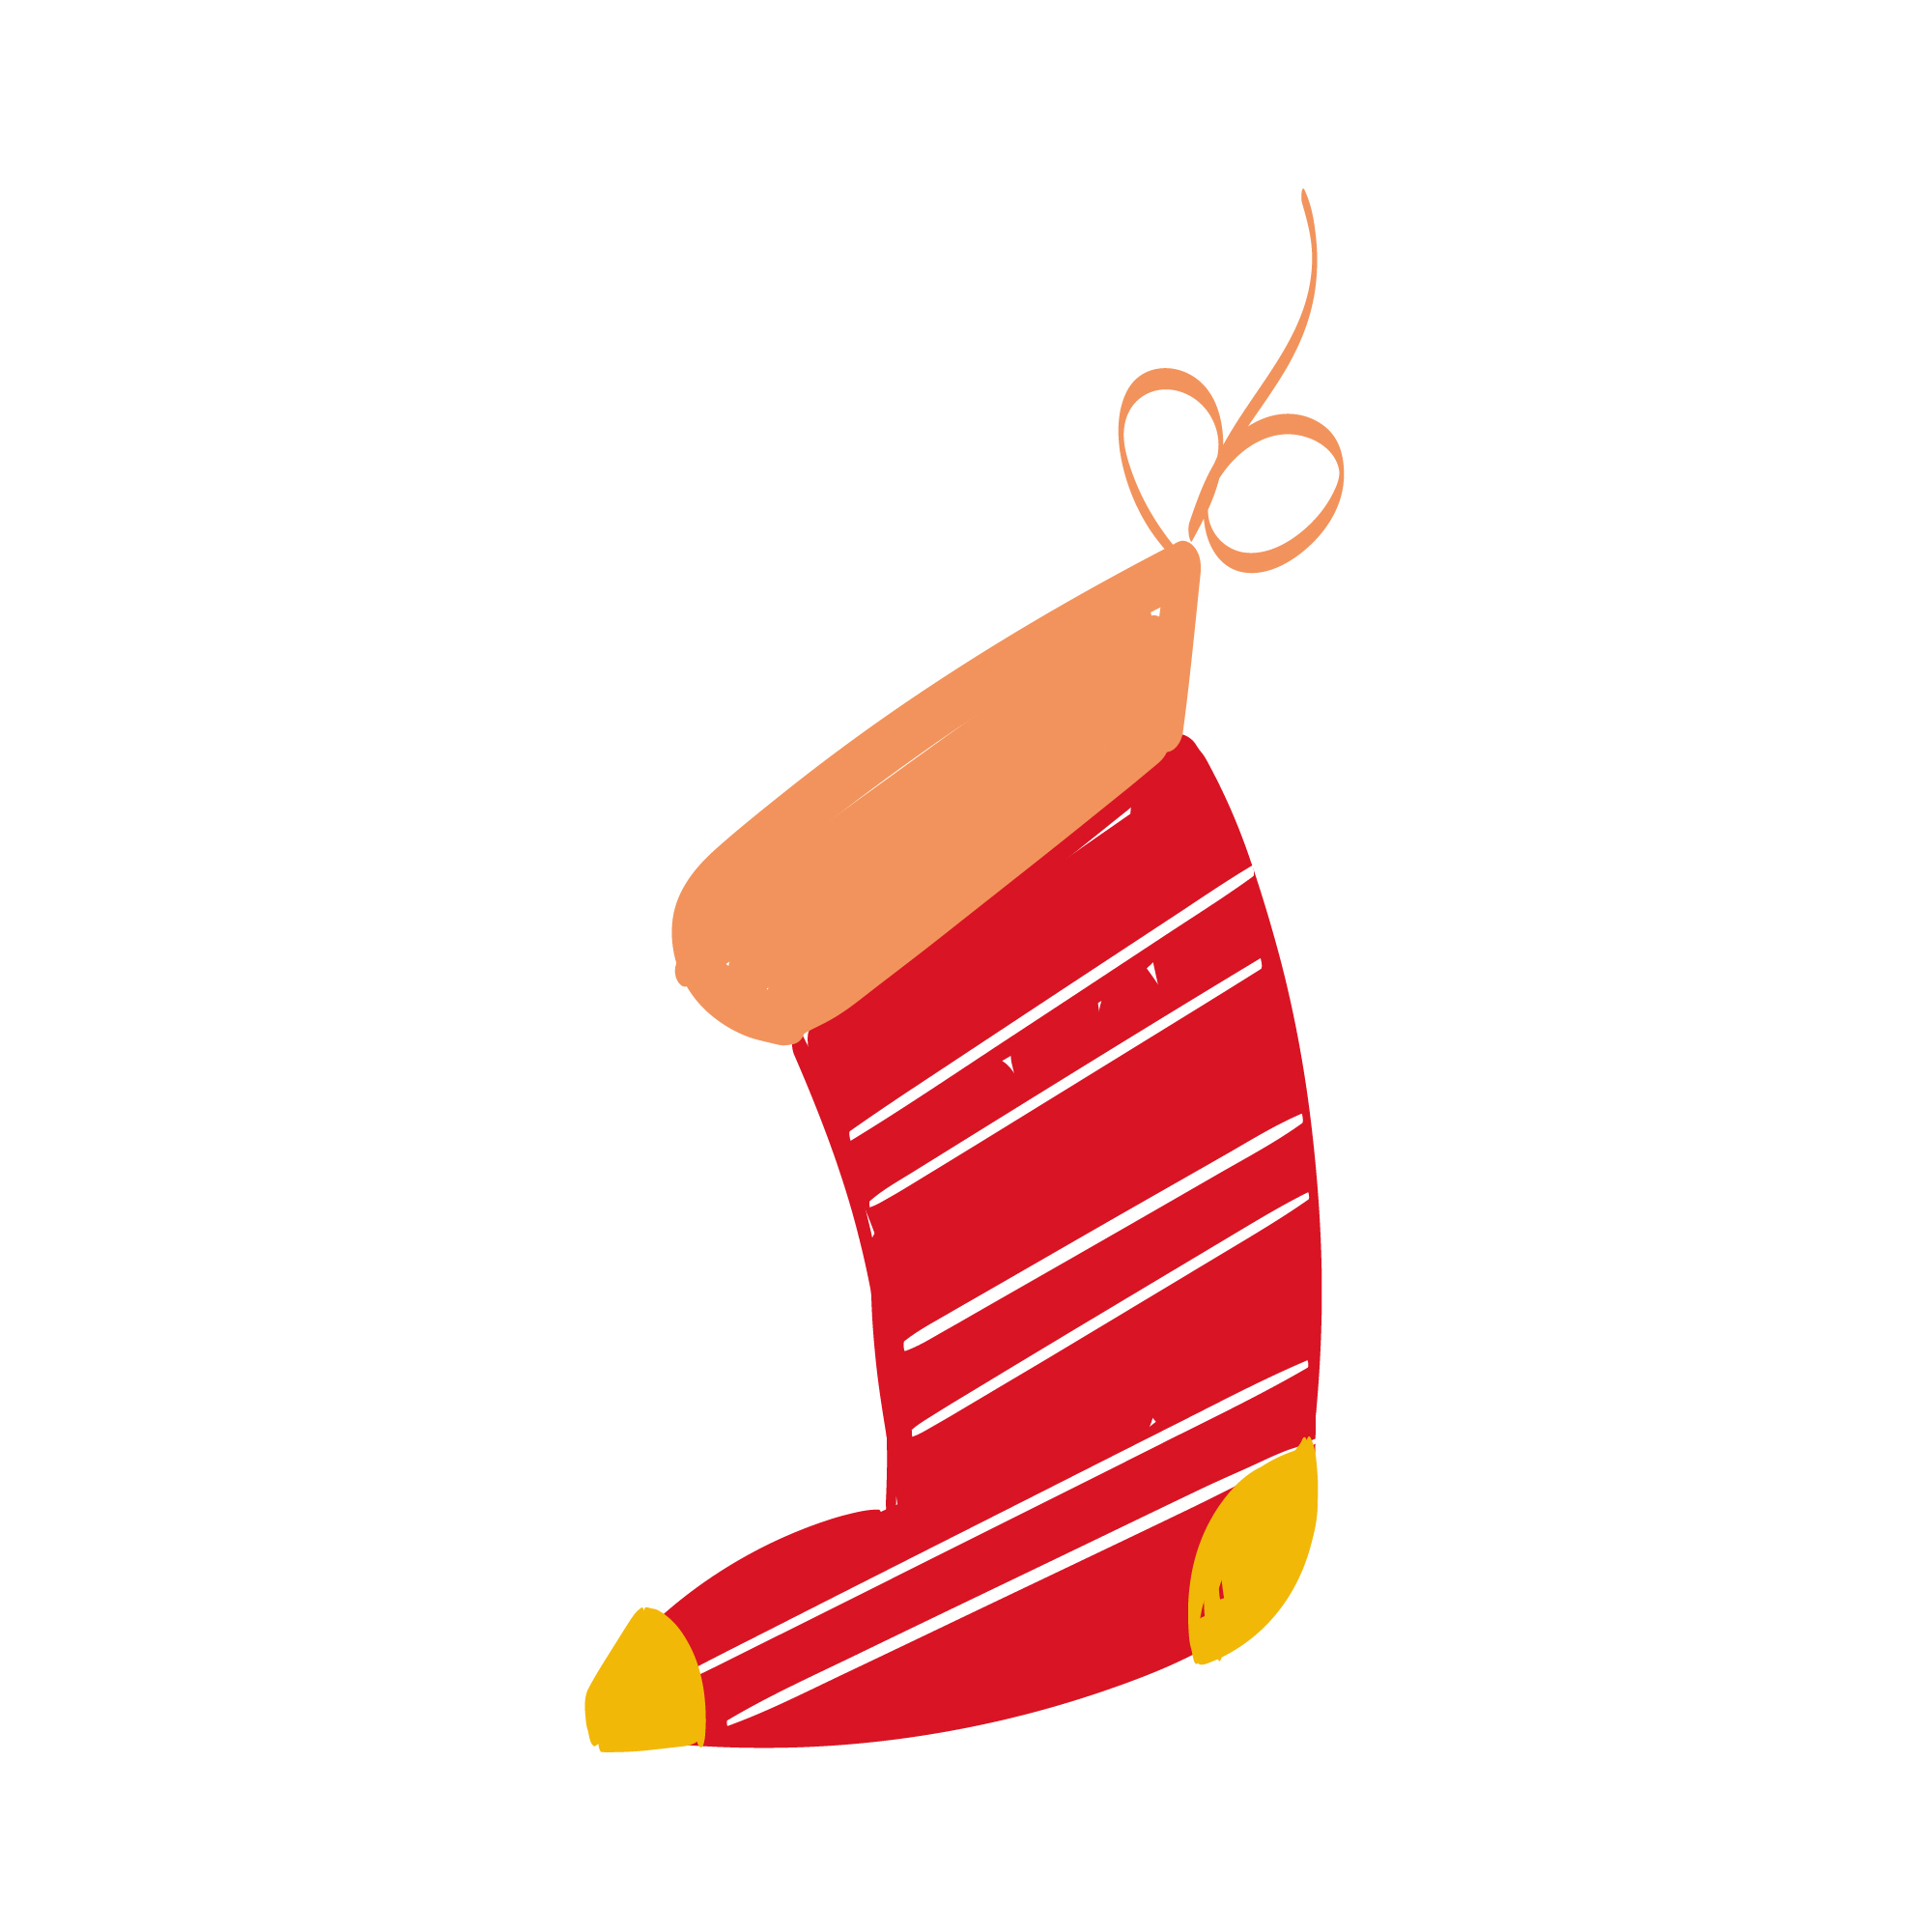 Image with Christmas sock design.